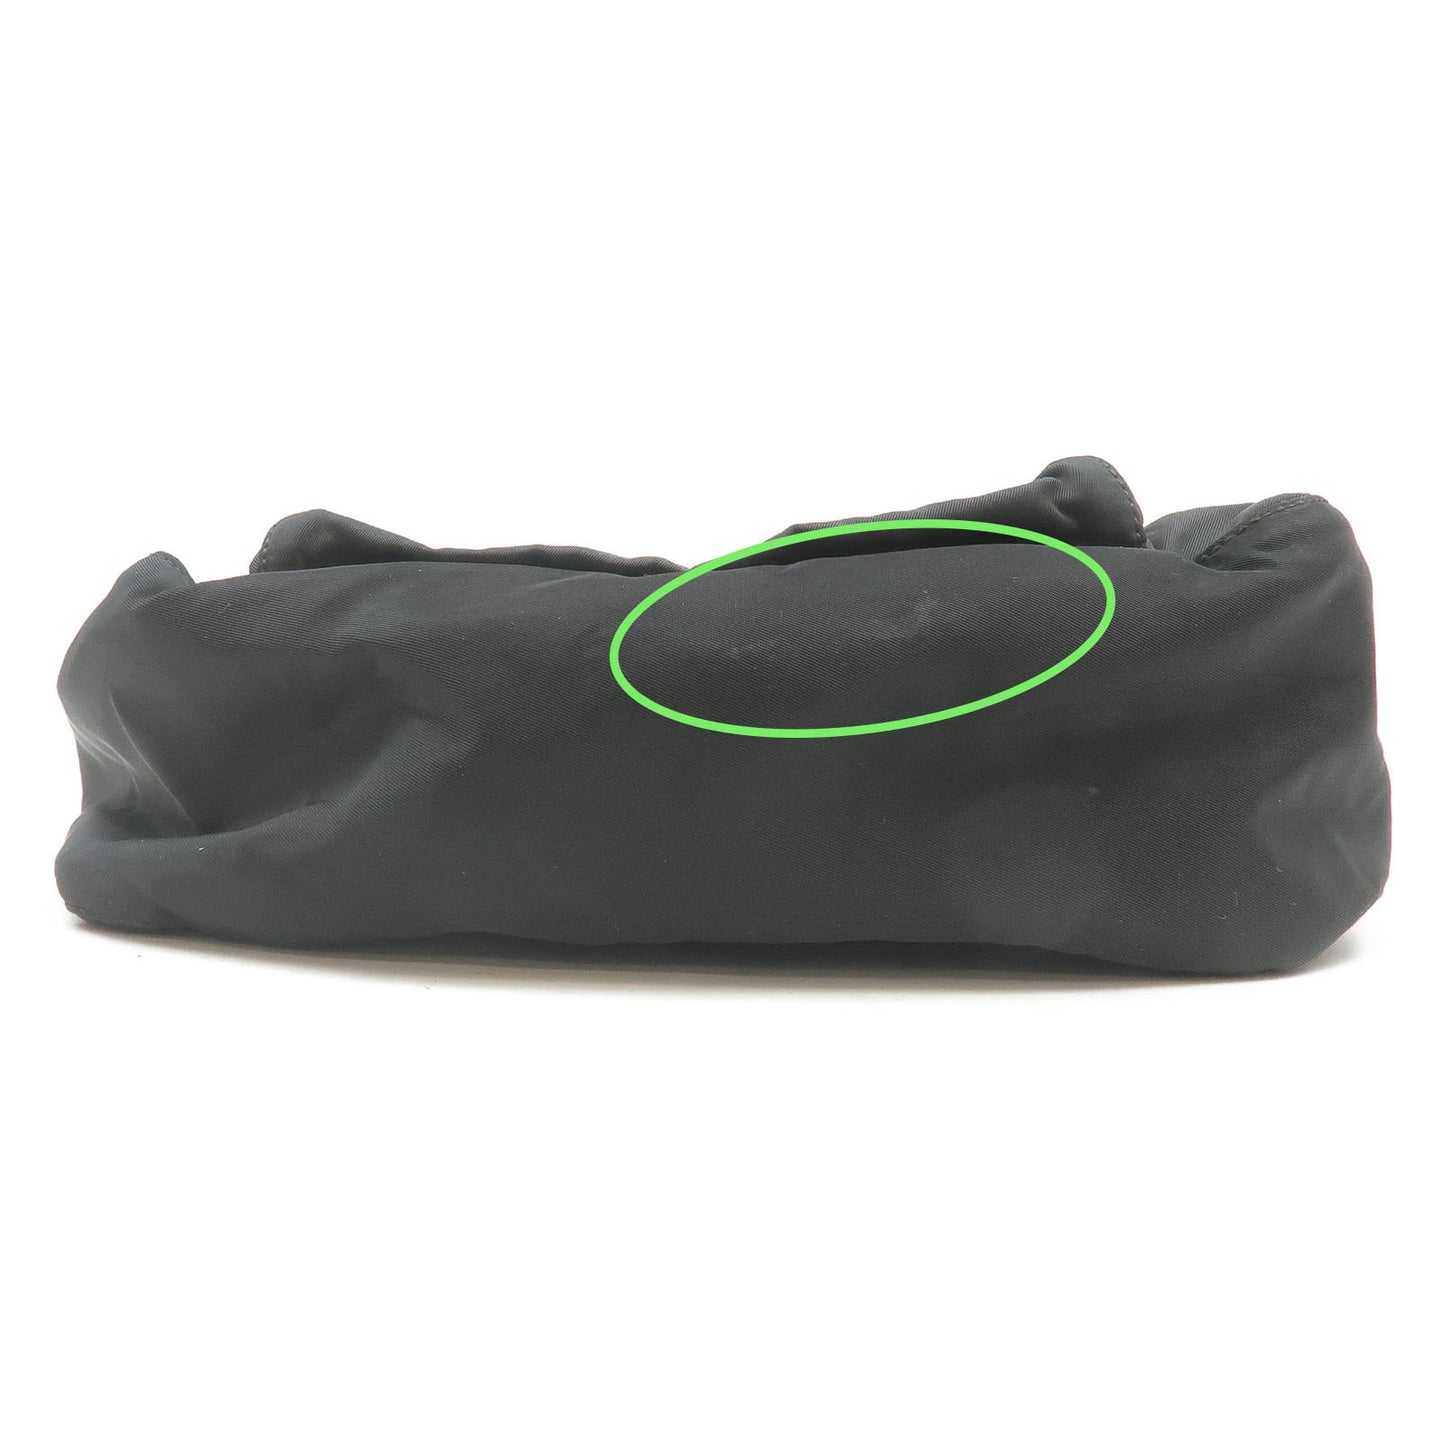 PRADA Nylon Leather Shoulder Bag Pouch NERO Black BT8994